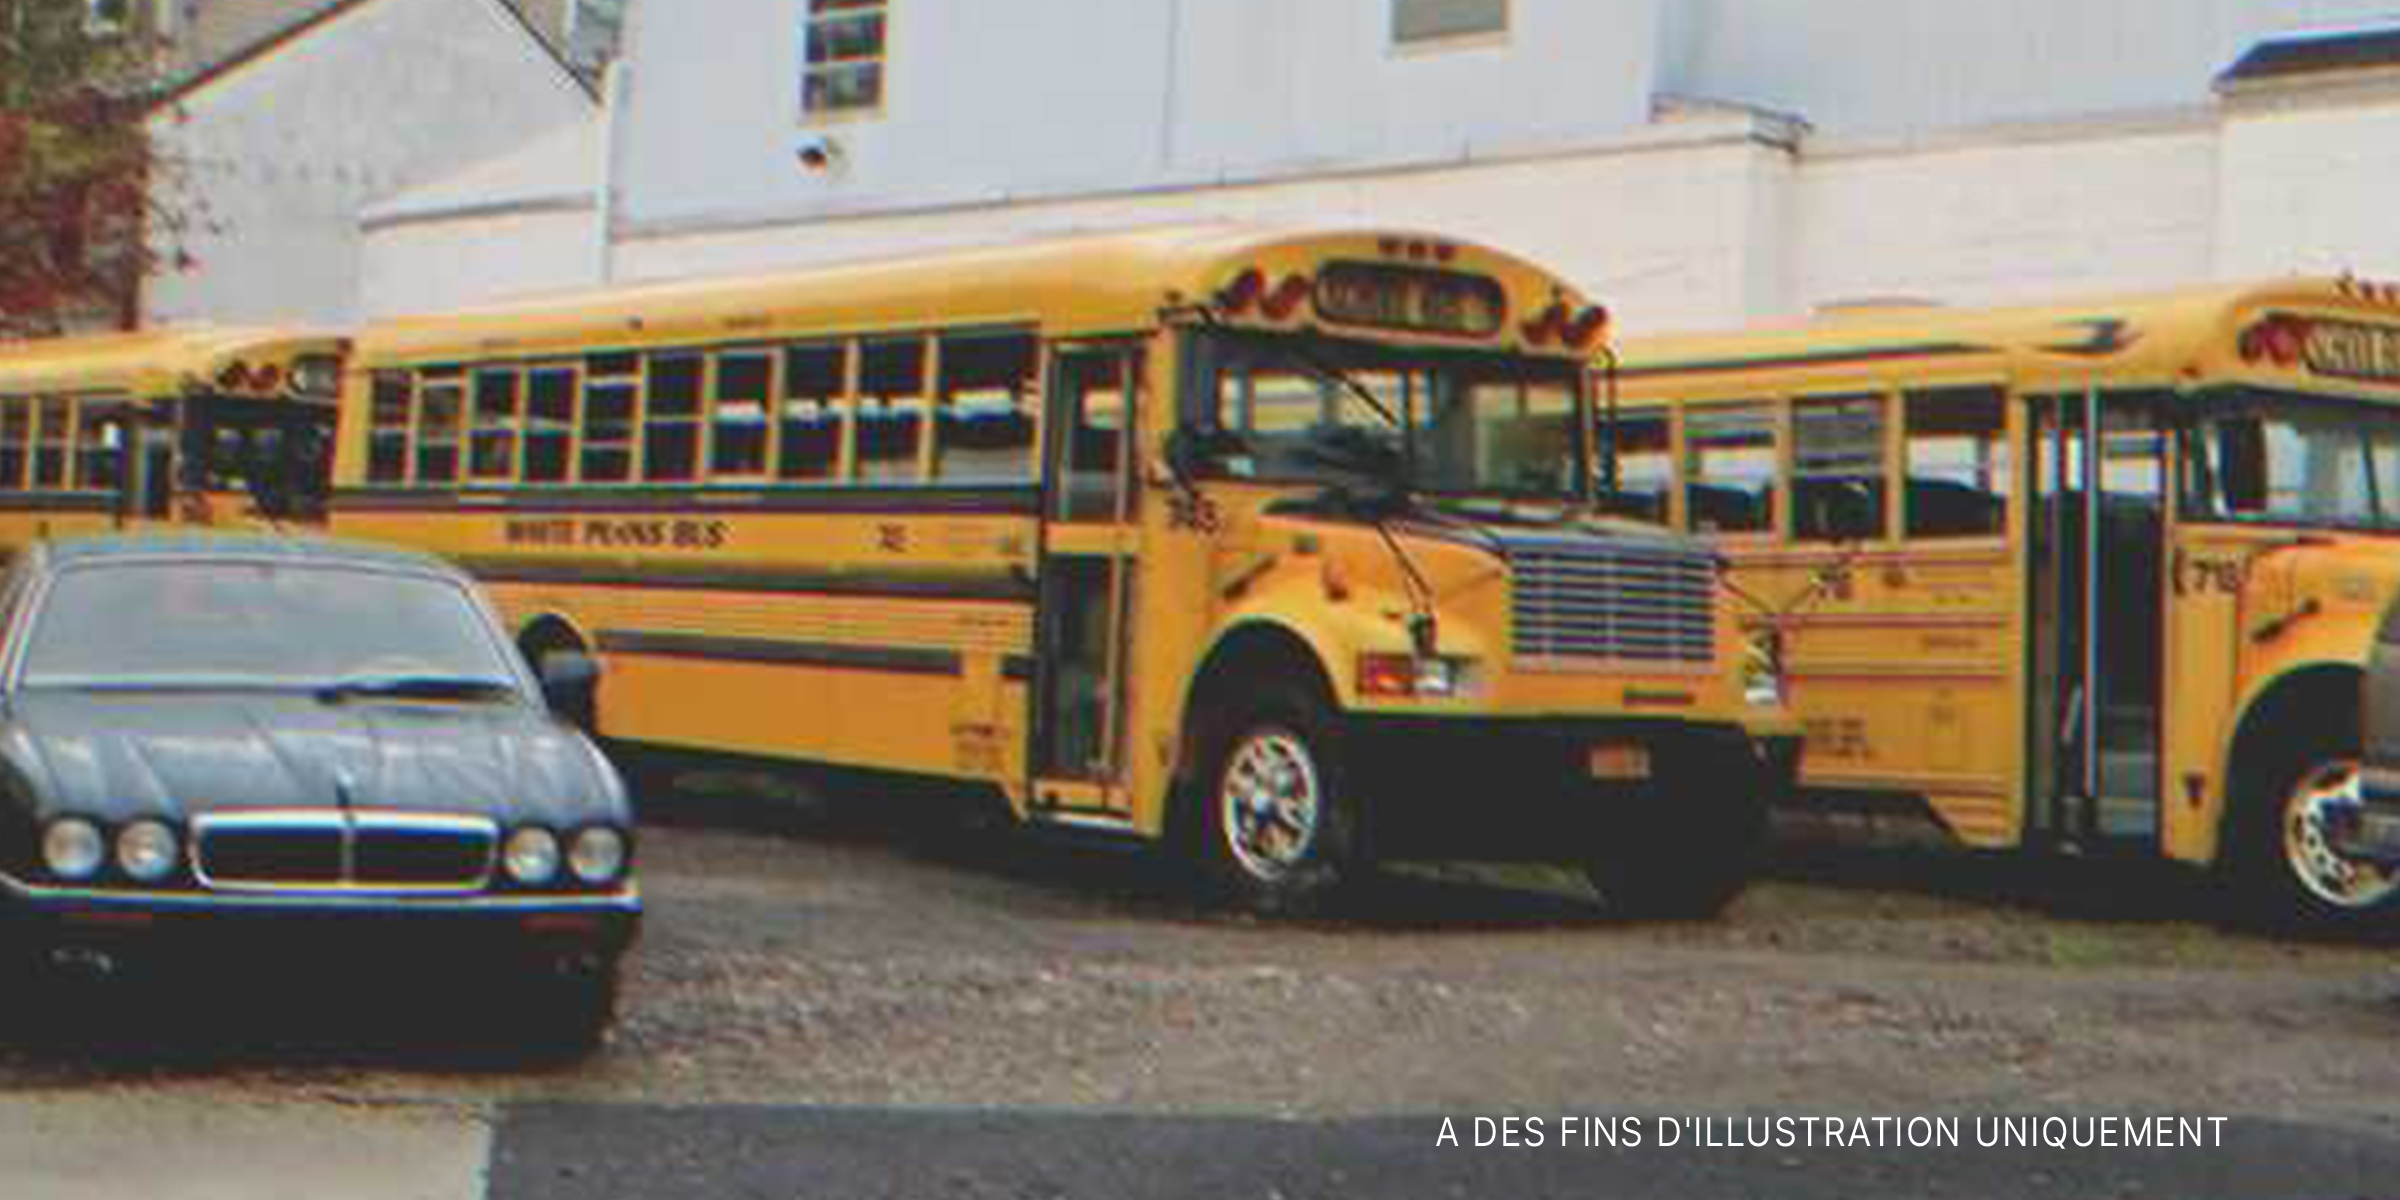 Des bus scolaires | Source : Flickr / ThoseGuys119